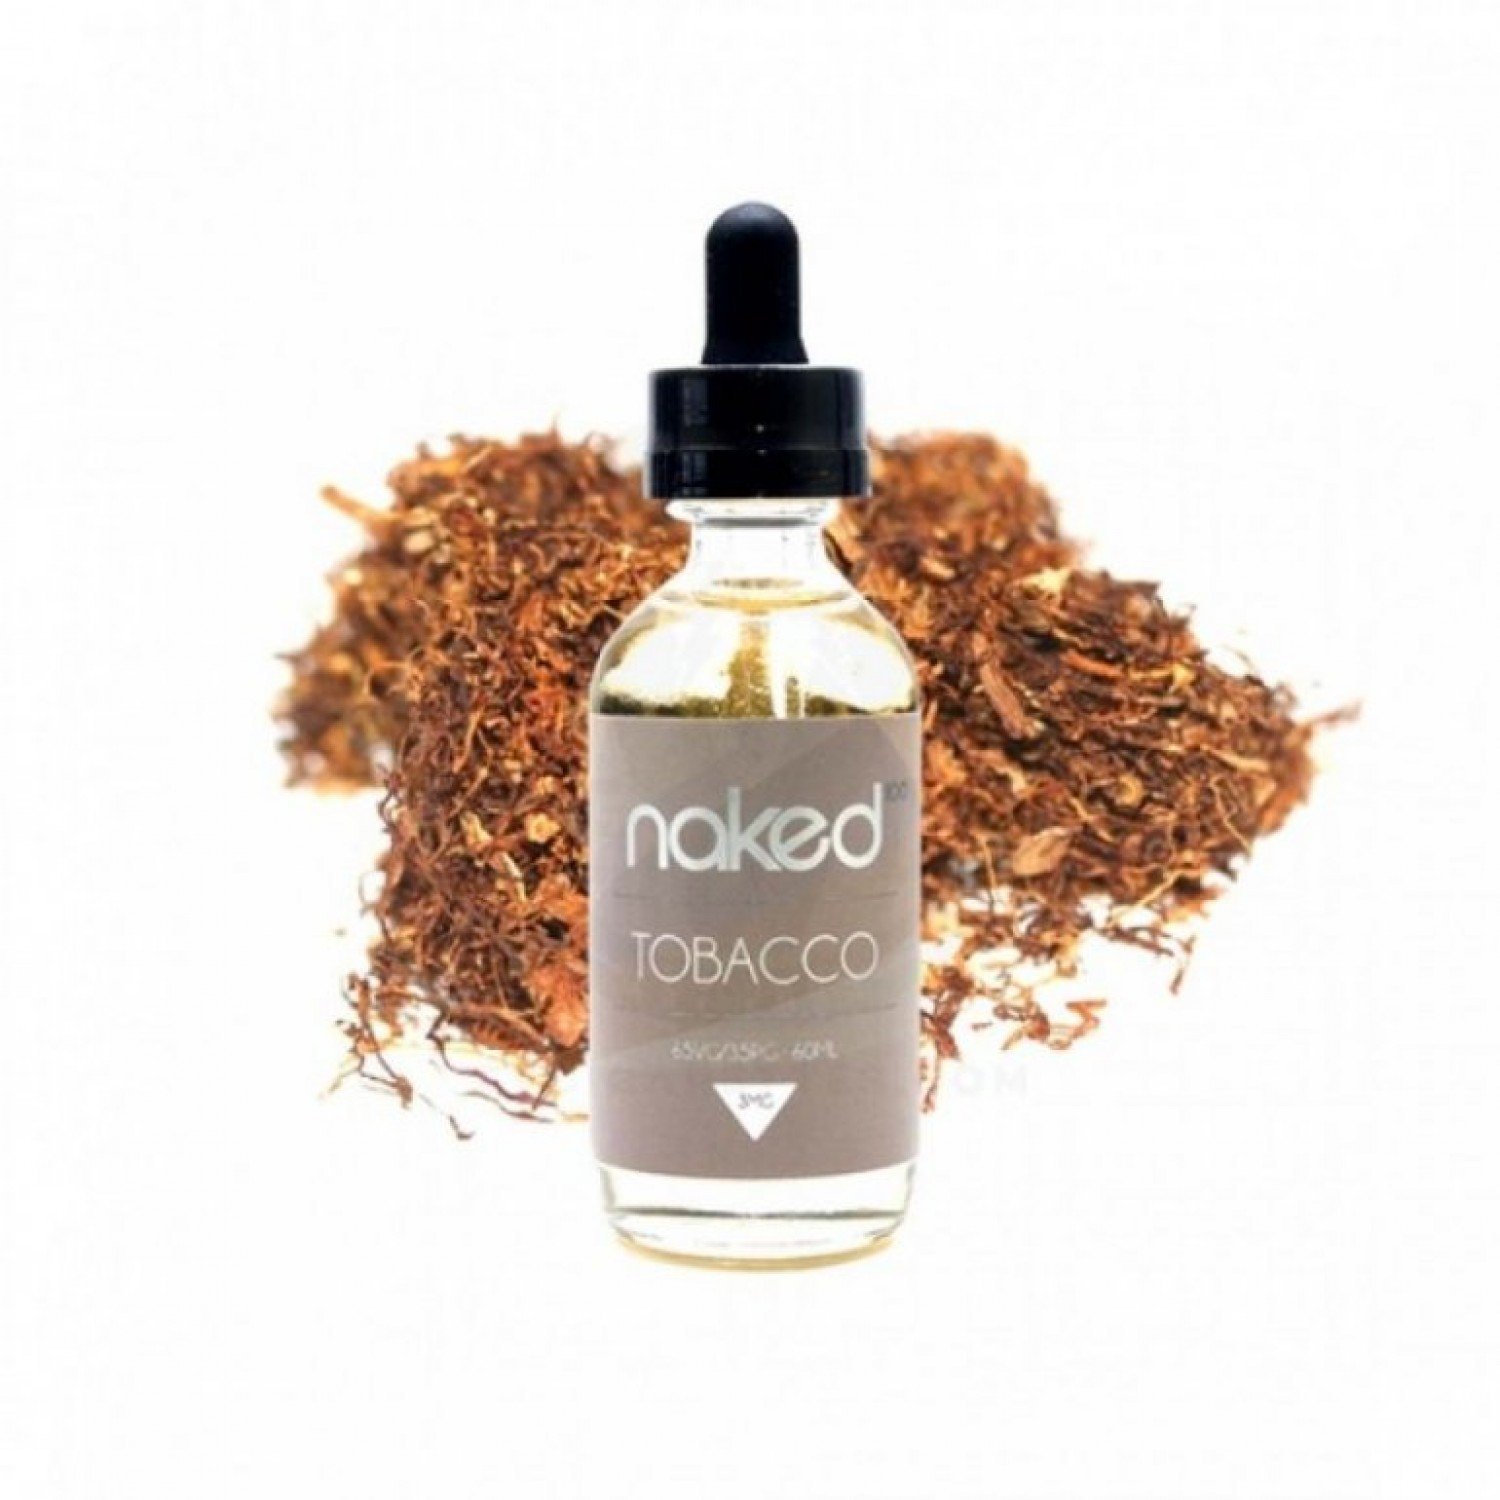 Naked - Cuban Blend Tobacco 60 ml Premium Likit